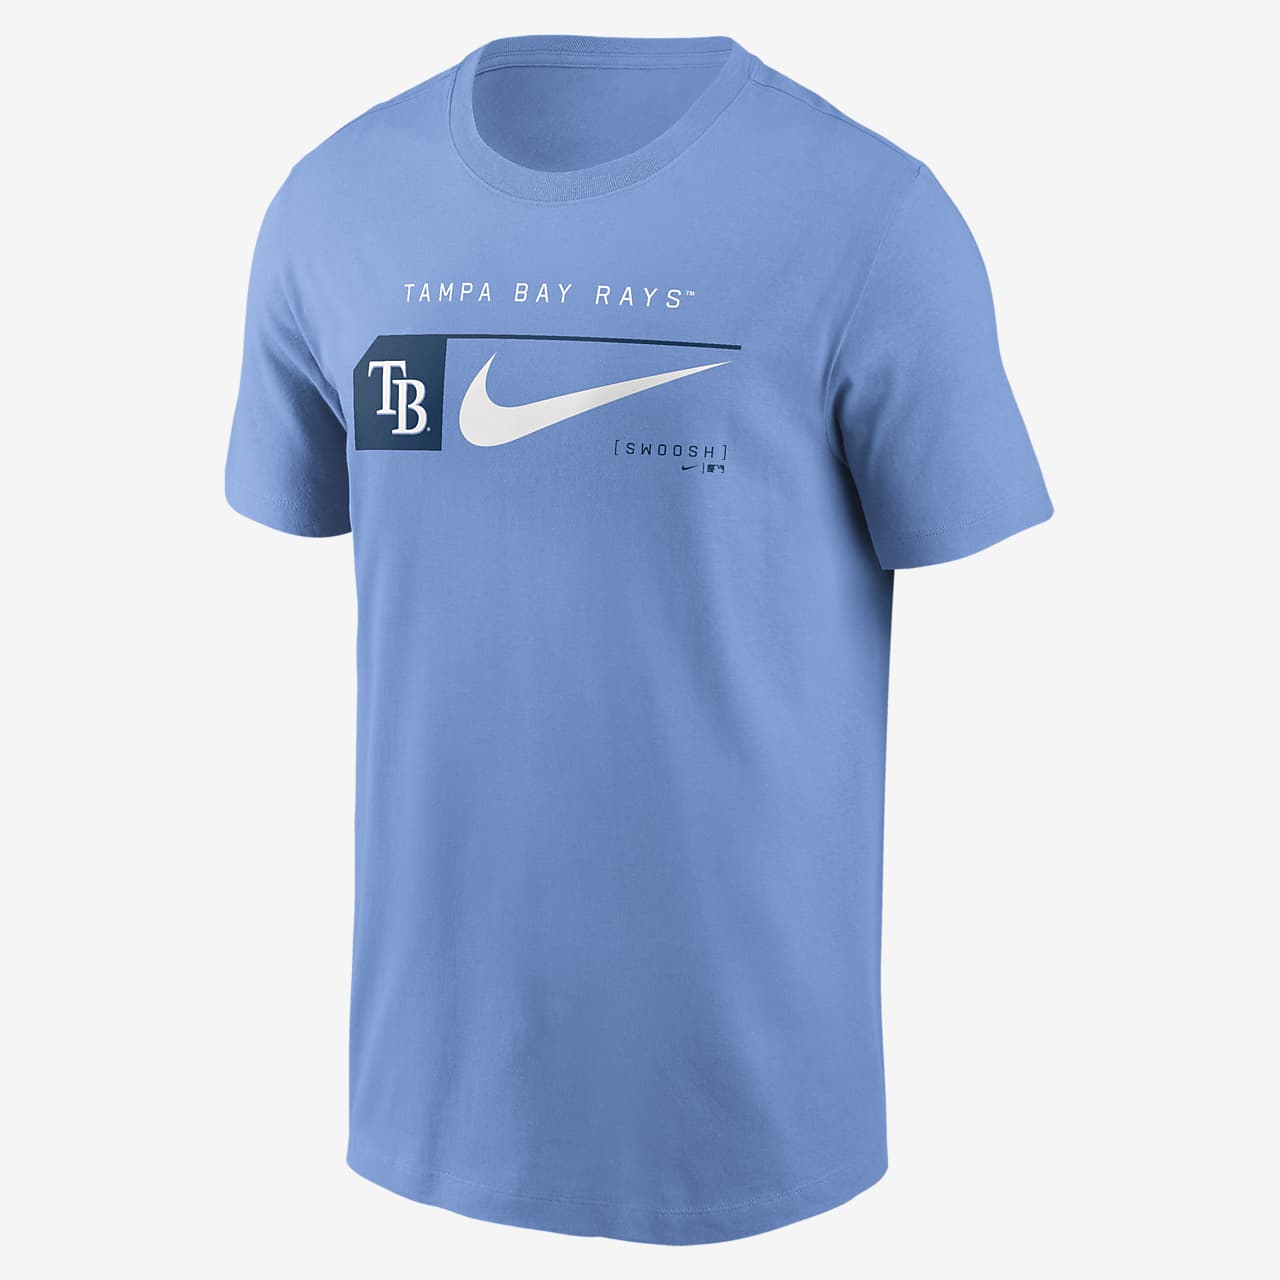 Tampa Bay Rays Team Swoosh Lockup Men's Nike MLB T-Shirt